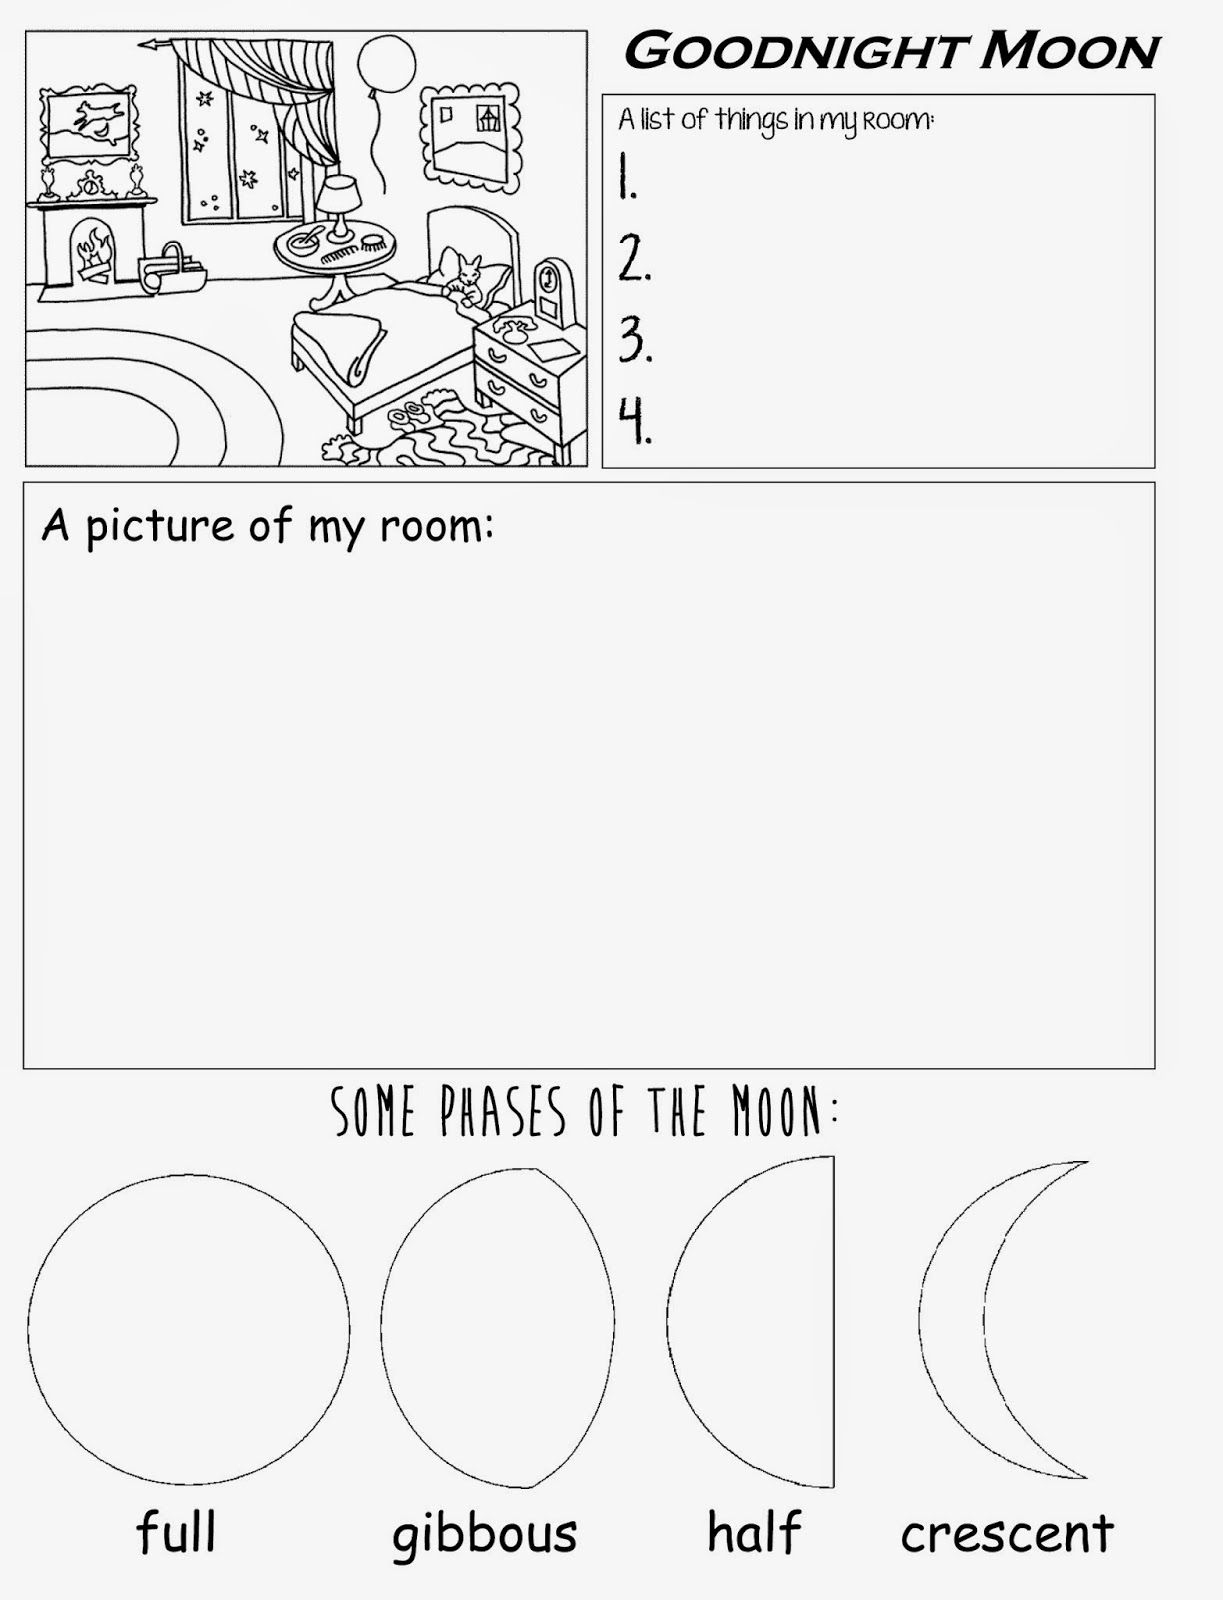 Goodnight Moon Free Printable Worksheet For Preschool Kindergarten | Goodnight Moon Printable Worksheets